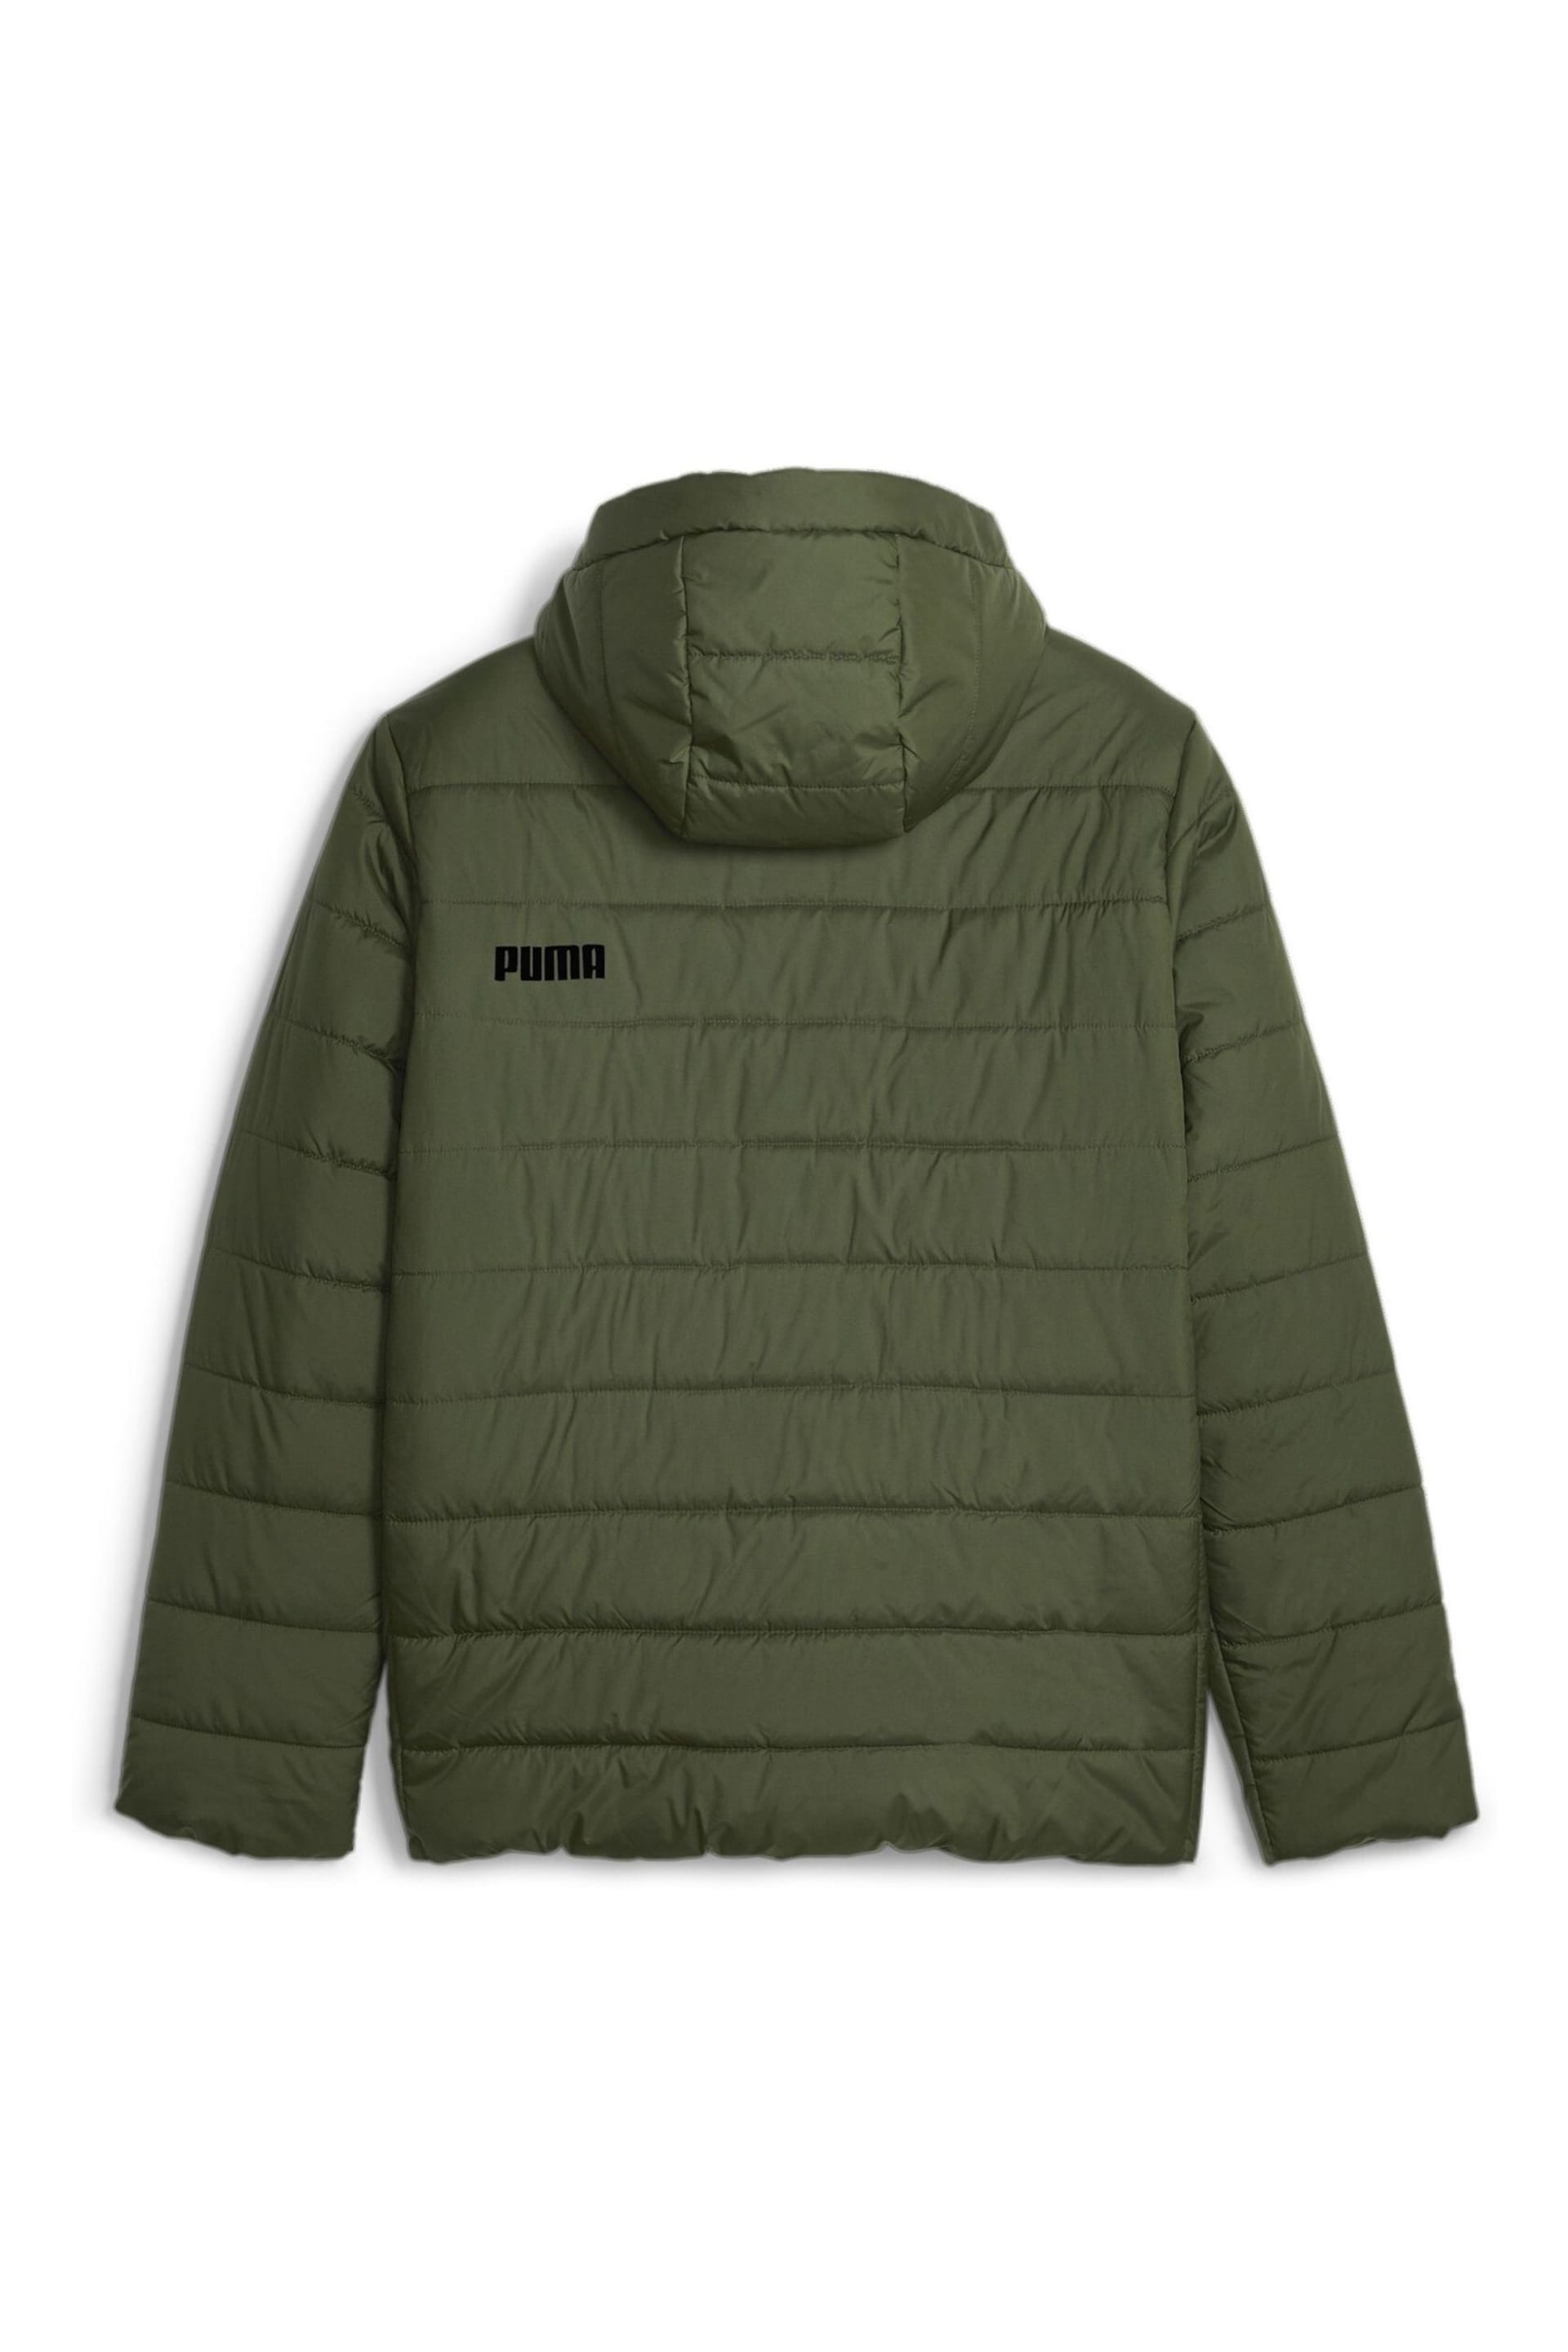 Puma Dark Green Essentials Padded Jacket - Image 7 of 7